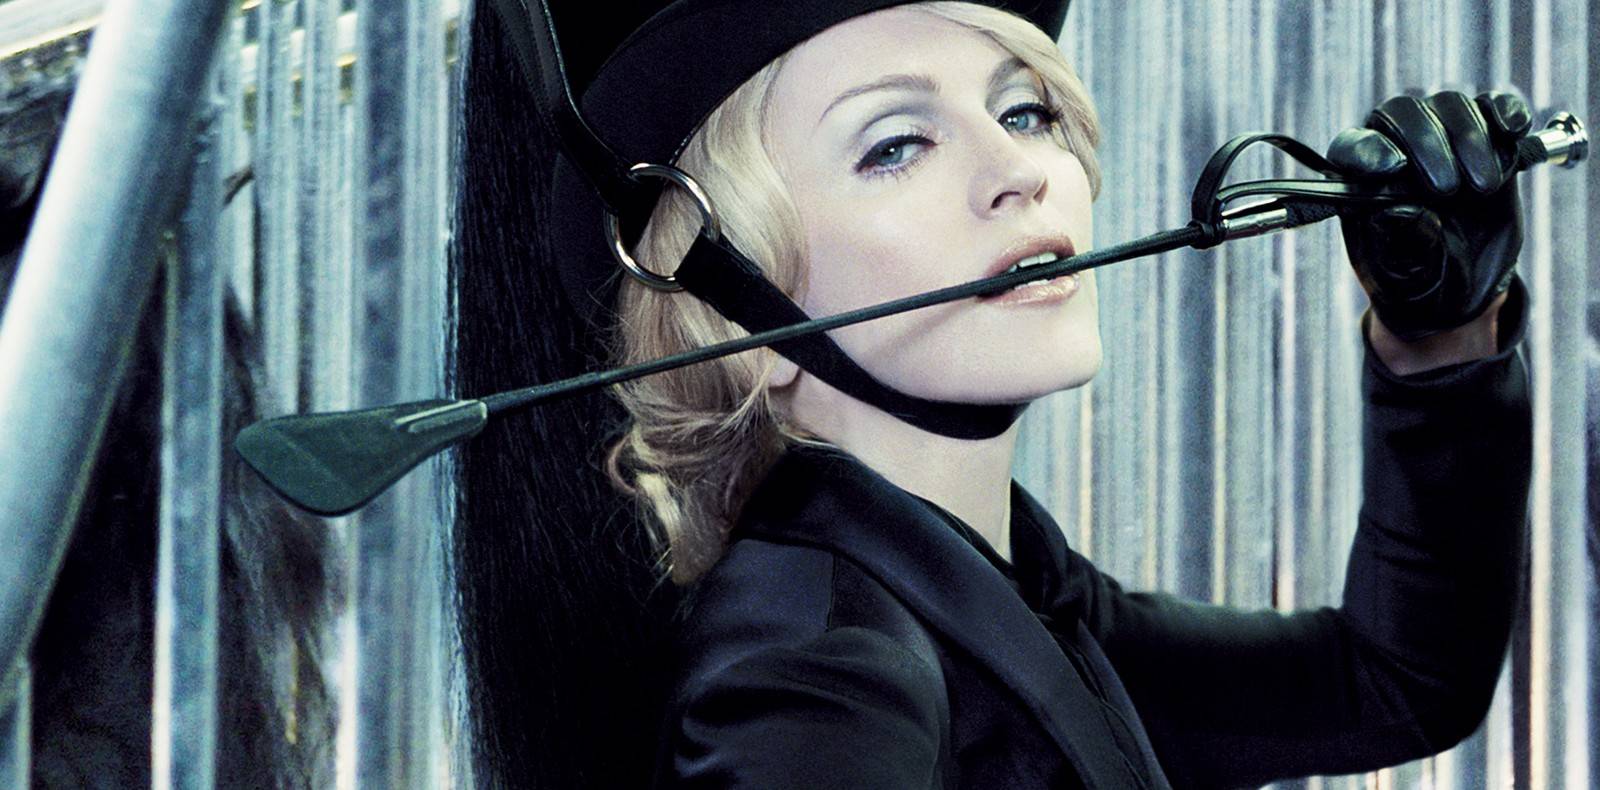 Madonna's 5 most memorable scandals